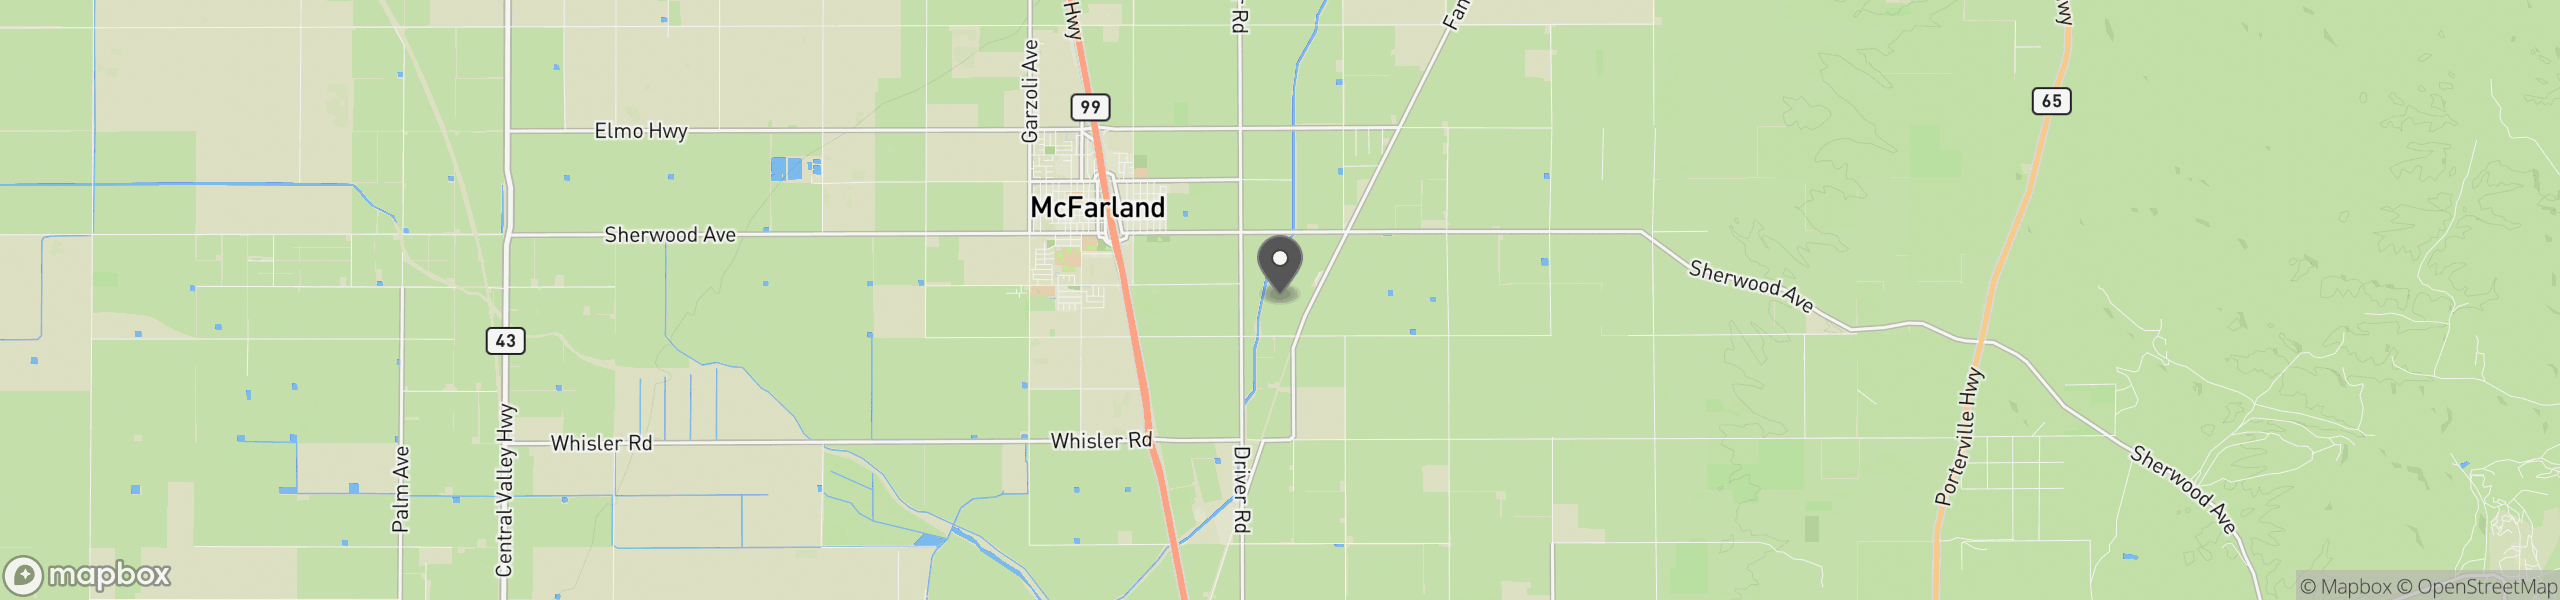 Mc Farland, CA 93250